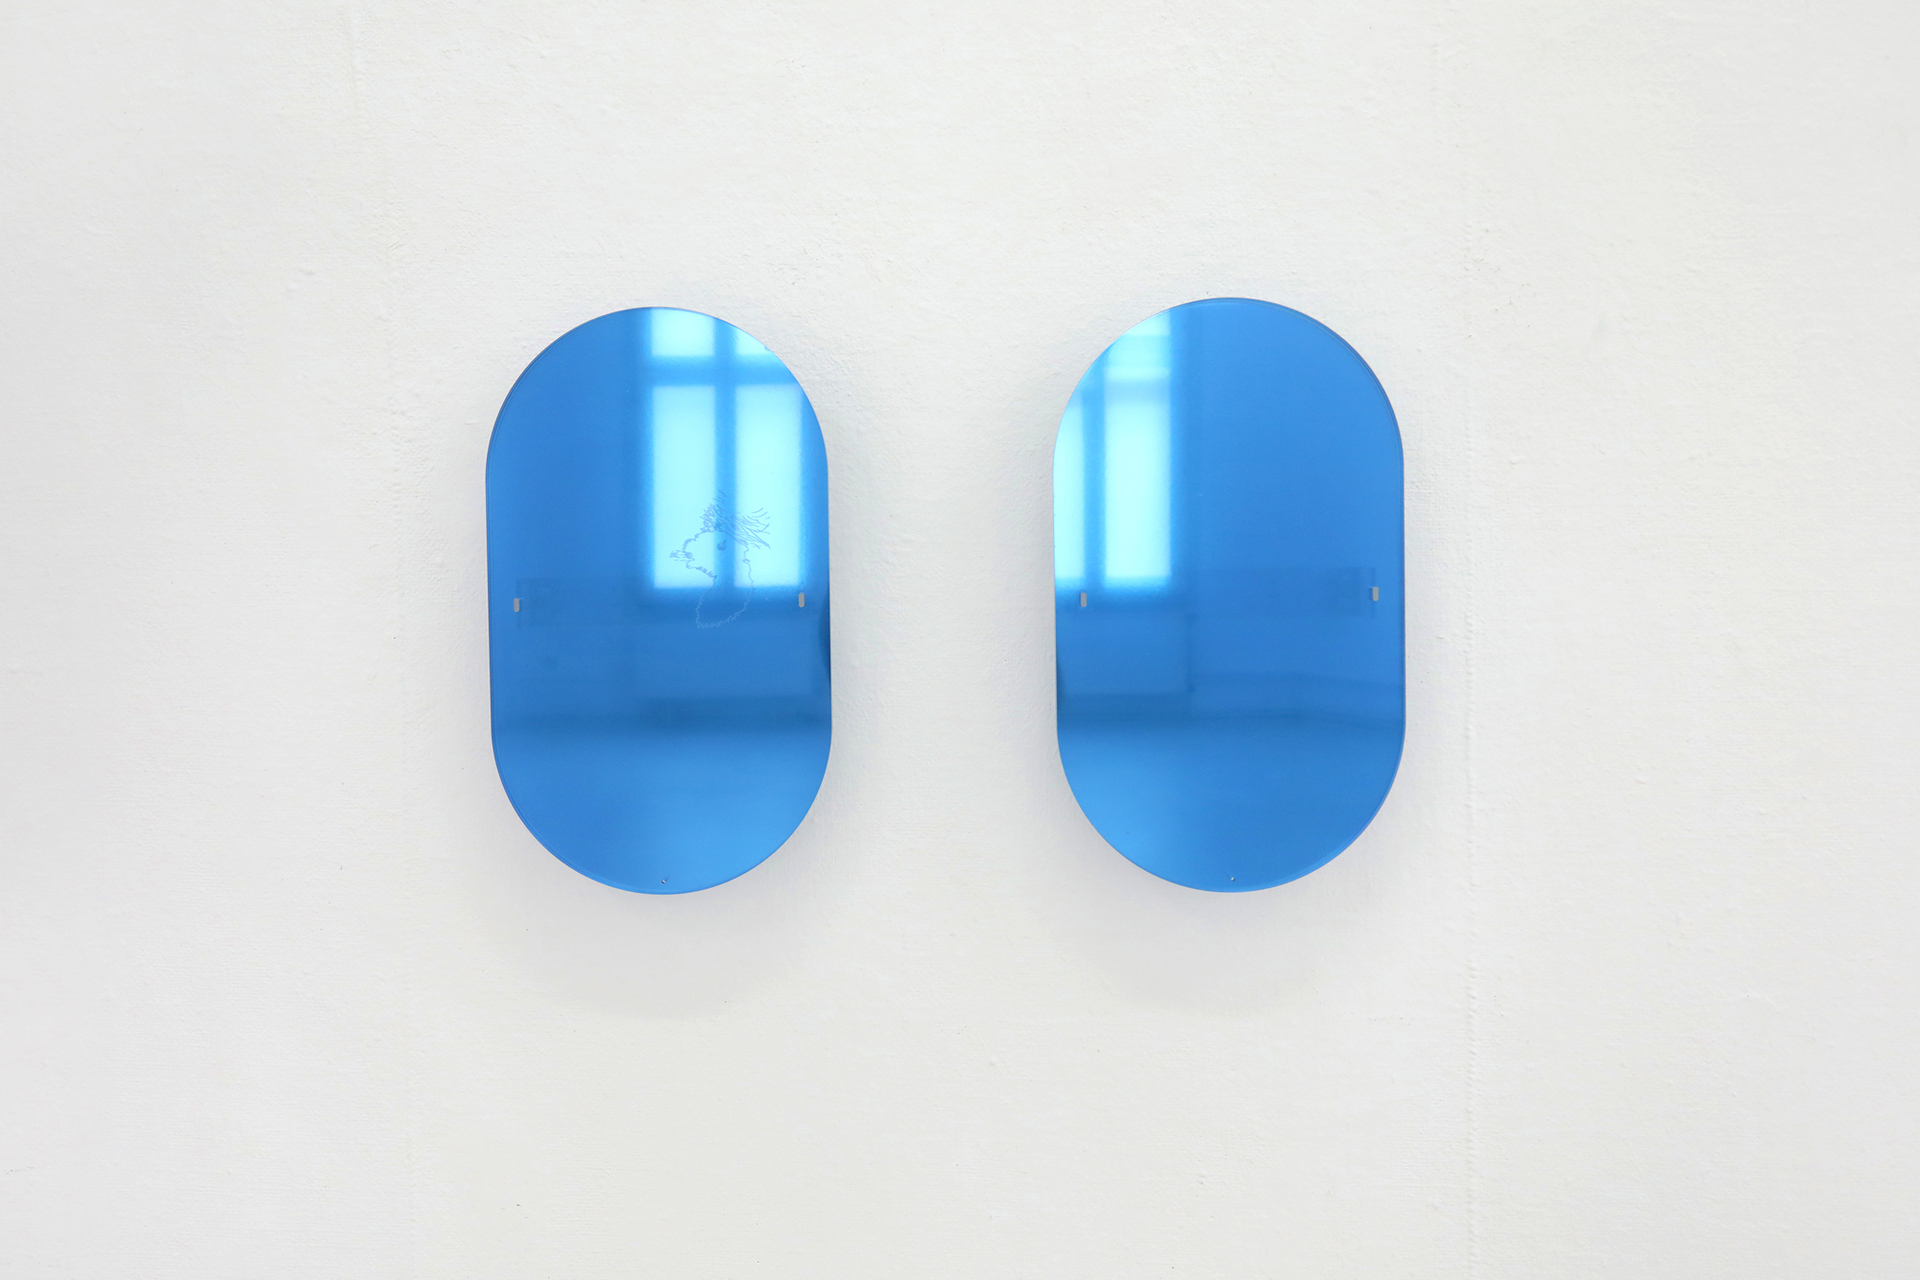 Lena Marie Emrich, "Dreamliner Series (Boeing 787)", 2020, Plexiglass, Aluminum, Two-way mirror, Oracal 8300 foil series, Set of 3, 46,7 x 27,2 cm x 7 cm each